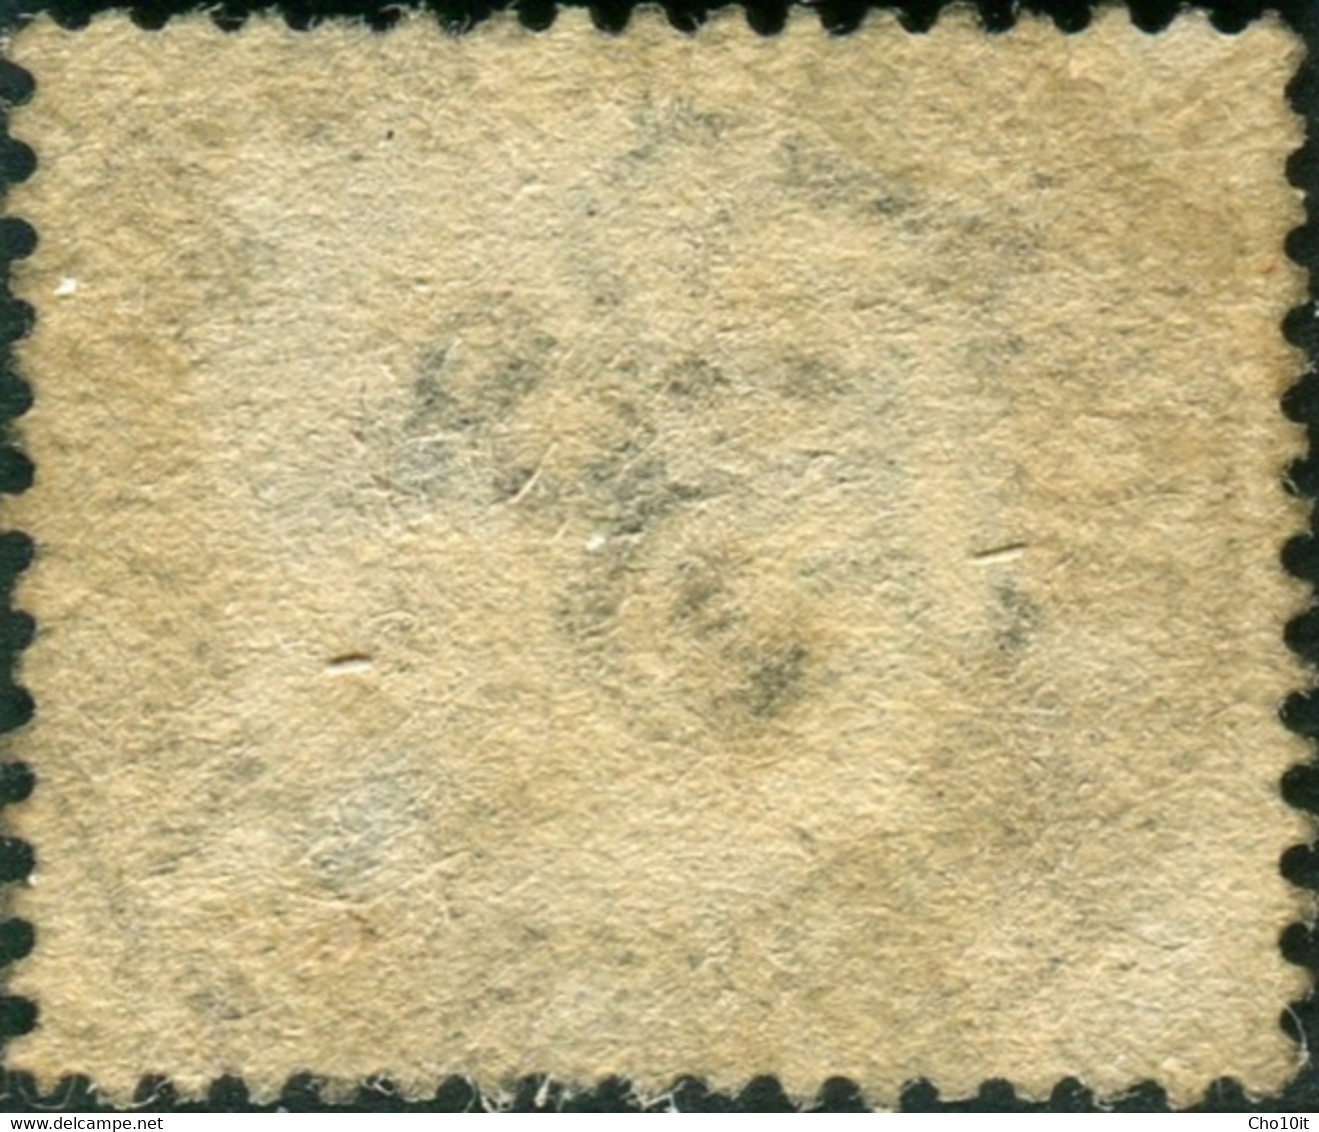 GB 1883 9d SG 195 ** MNH QV Blackstone Rd-FinsburyPk 30-AUG-1883 Canc (003072) - Unused Stamps